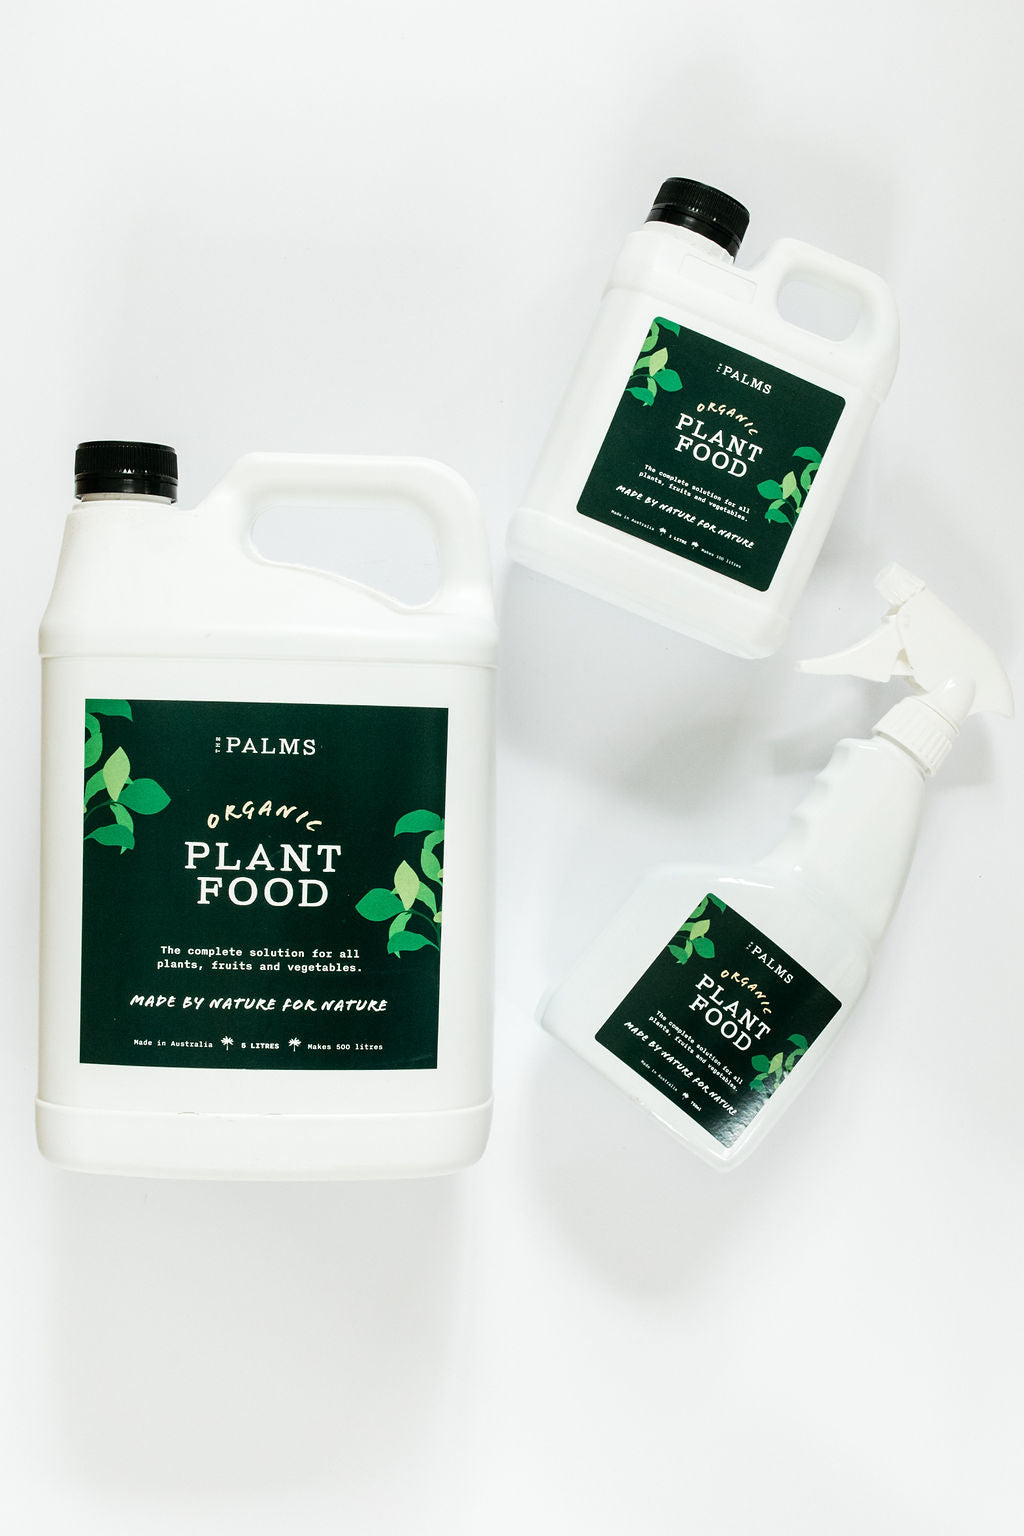 The Palms Organic Plant Food Spray